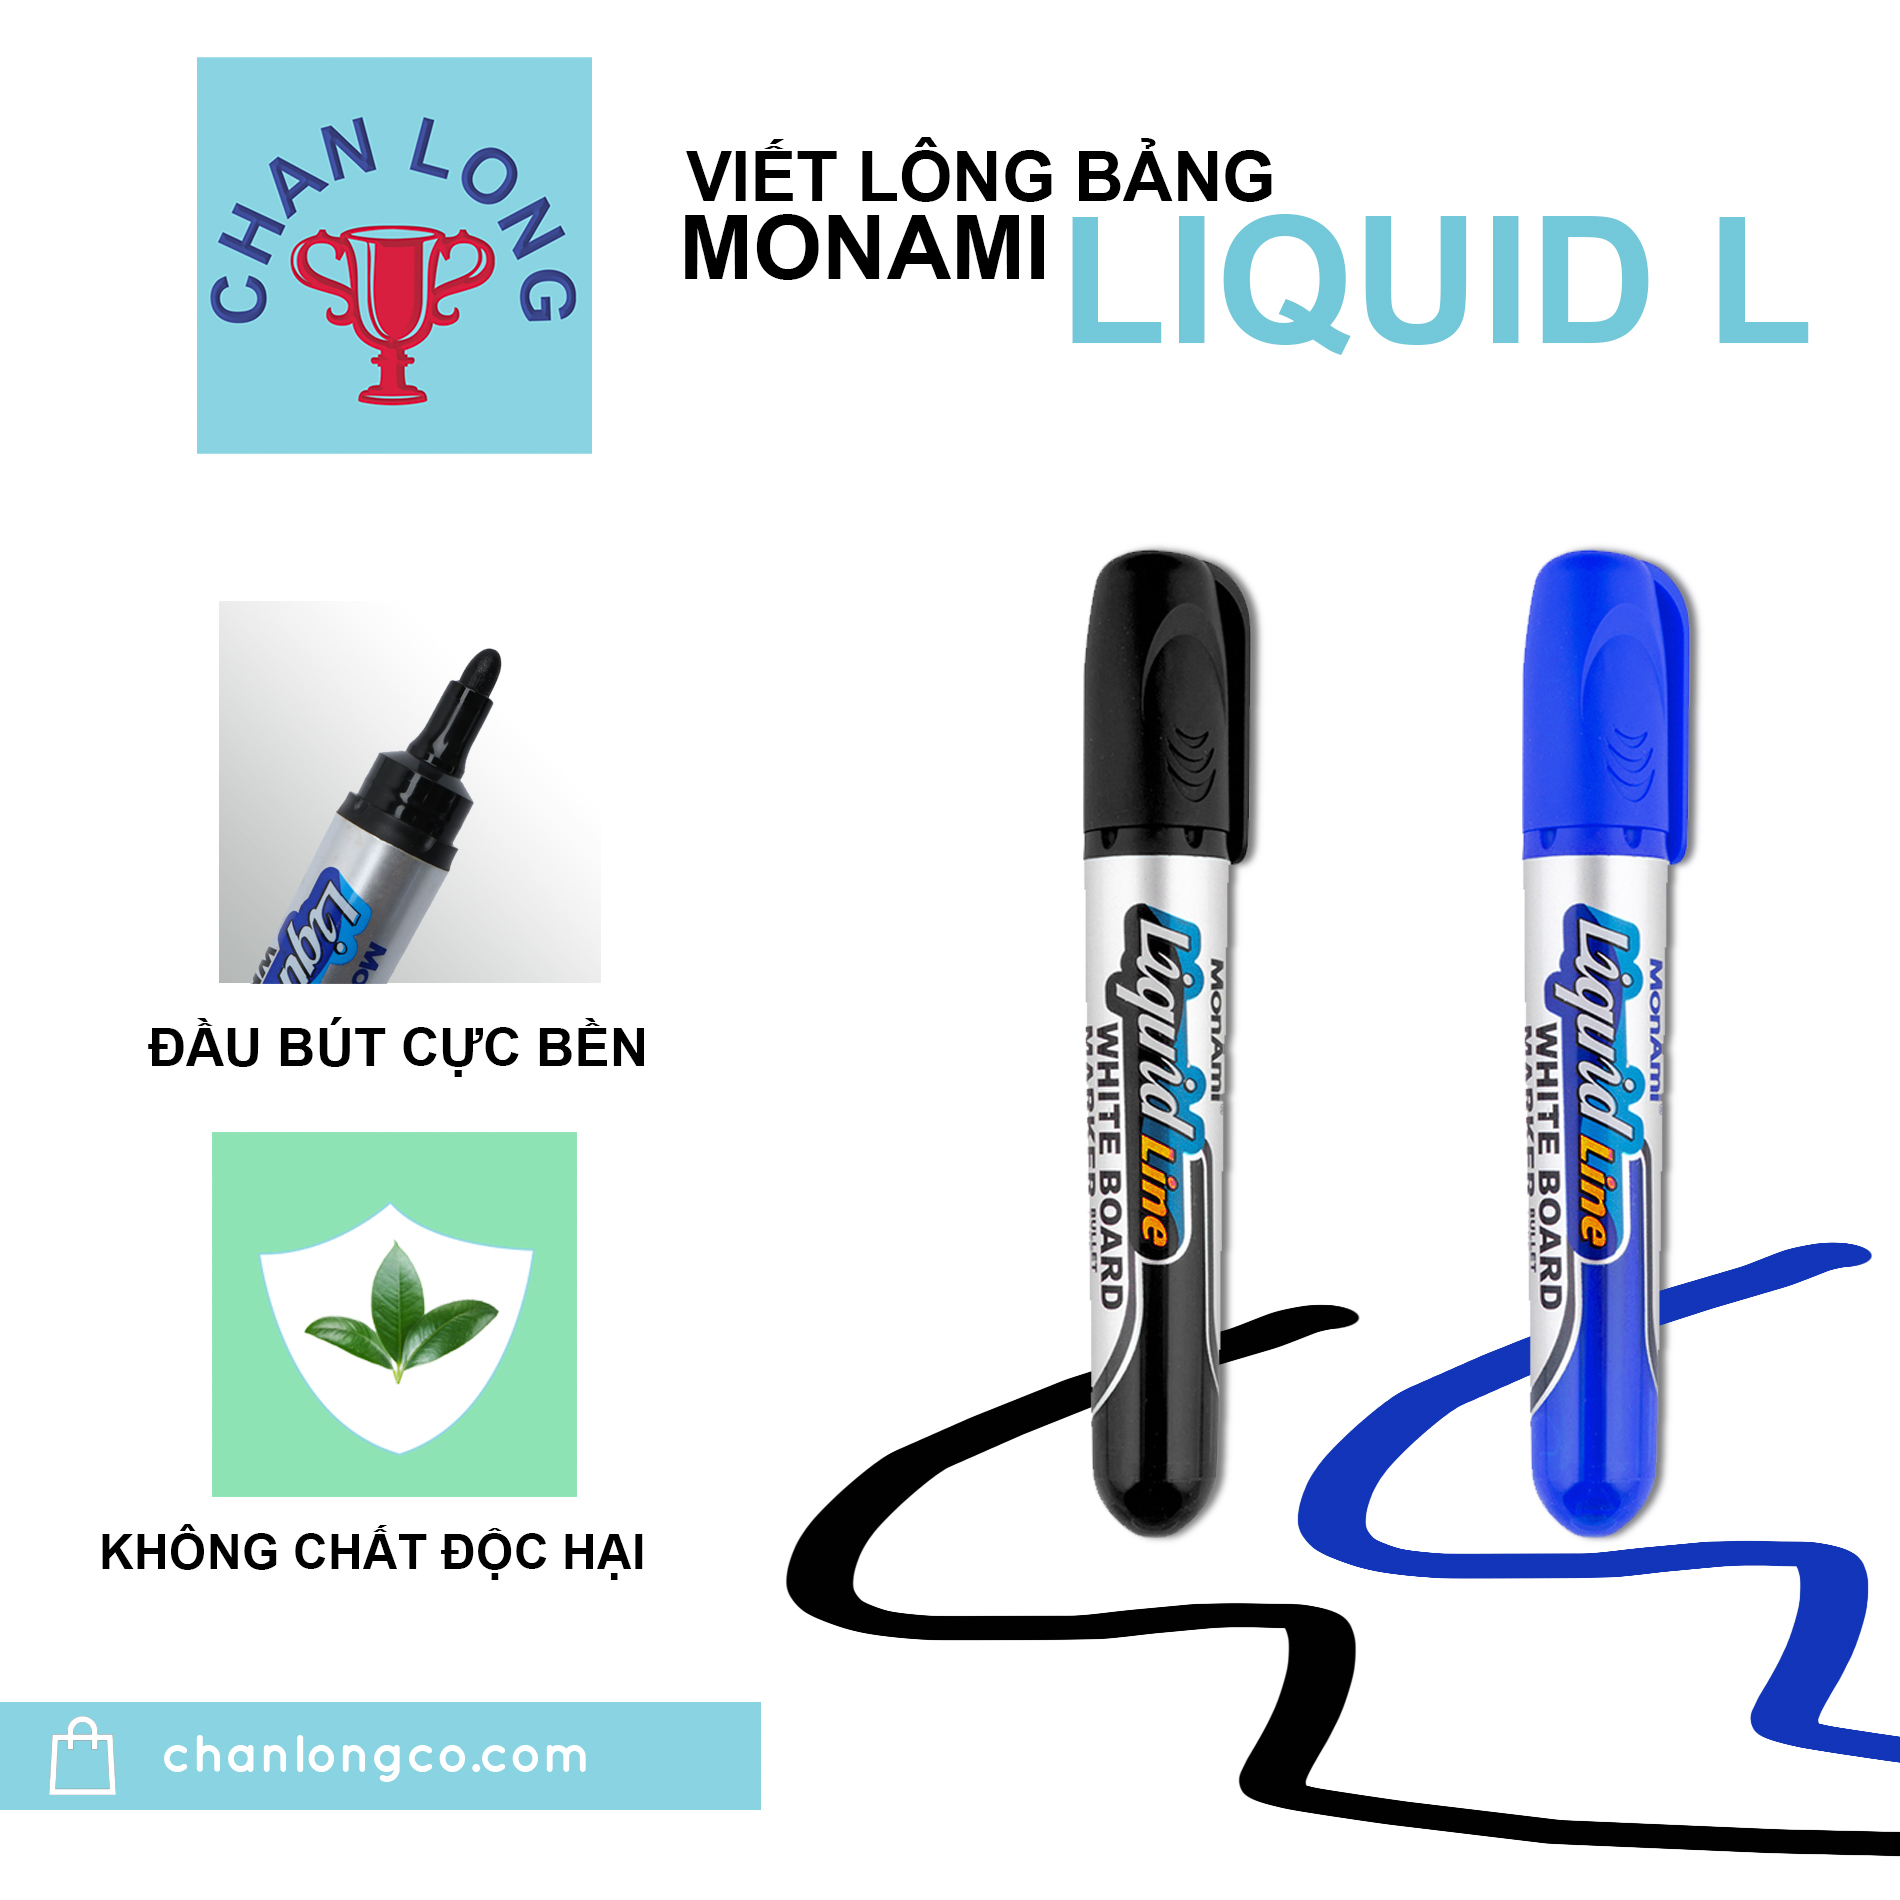 Lông bảng Monami Liquid Line